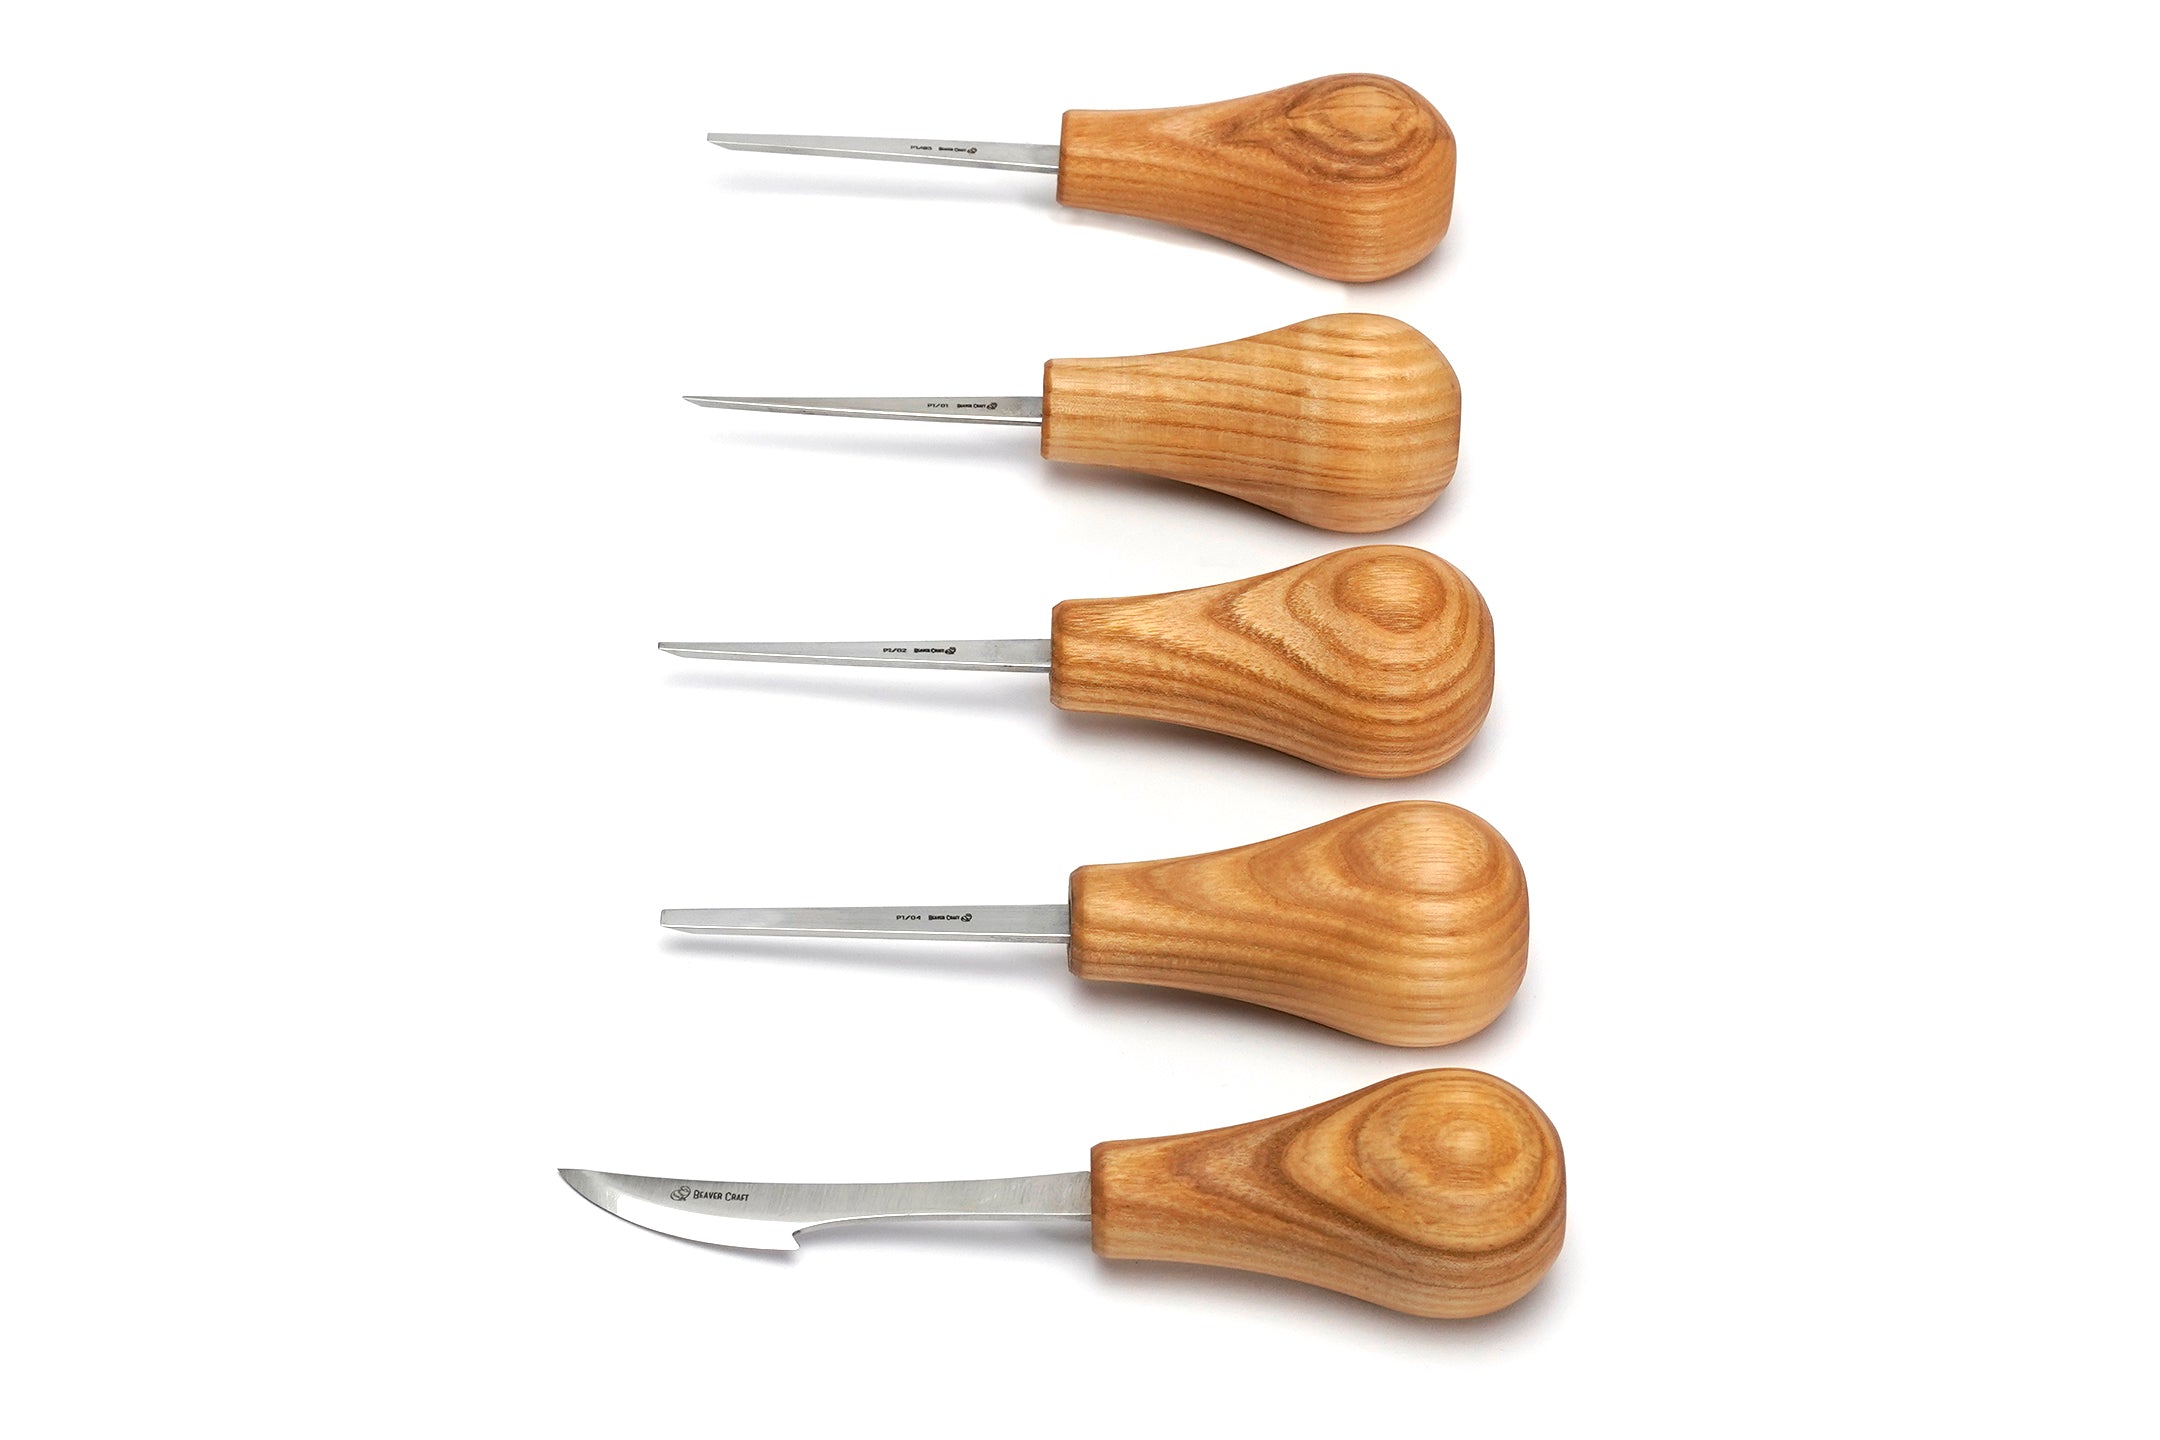 BLOSTM Wood Chisel Set 8PCS Carving Tools Sharpening Stone Shovel Engrave  Carve